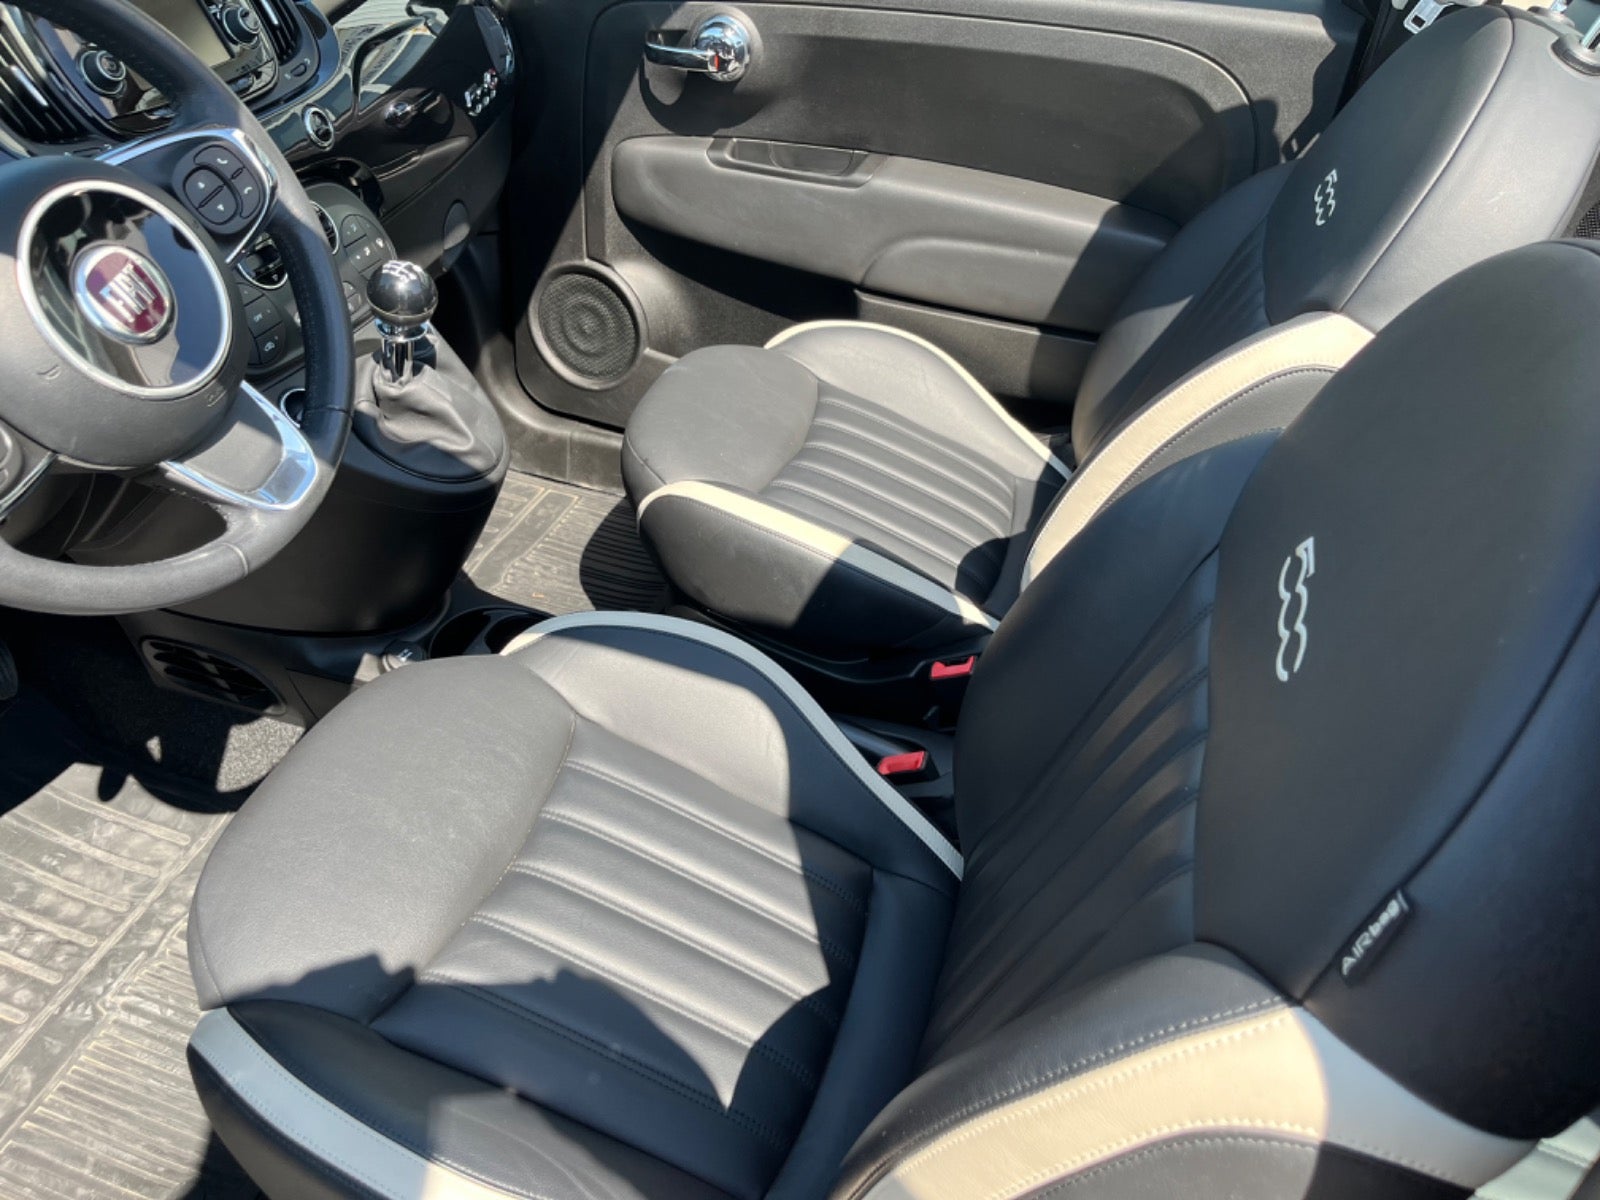 Fiat 500C 1,2 Lounge Benzin modelår 2018 km 36000 Sort ABS